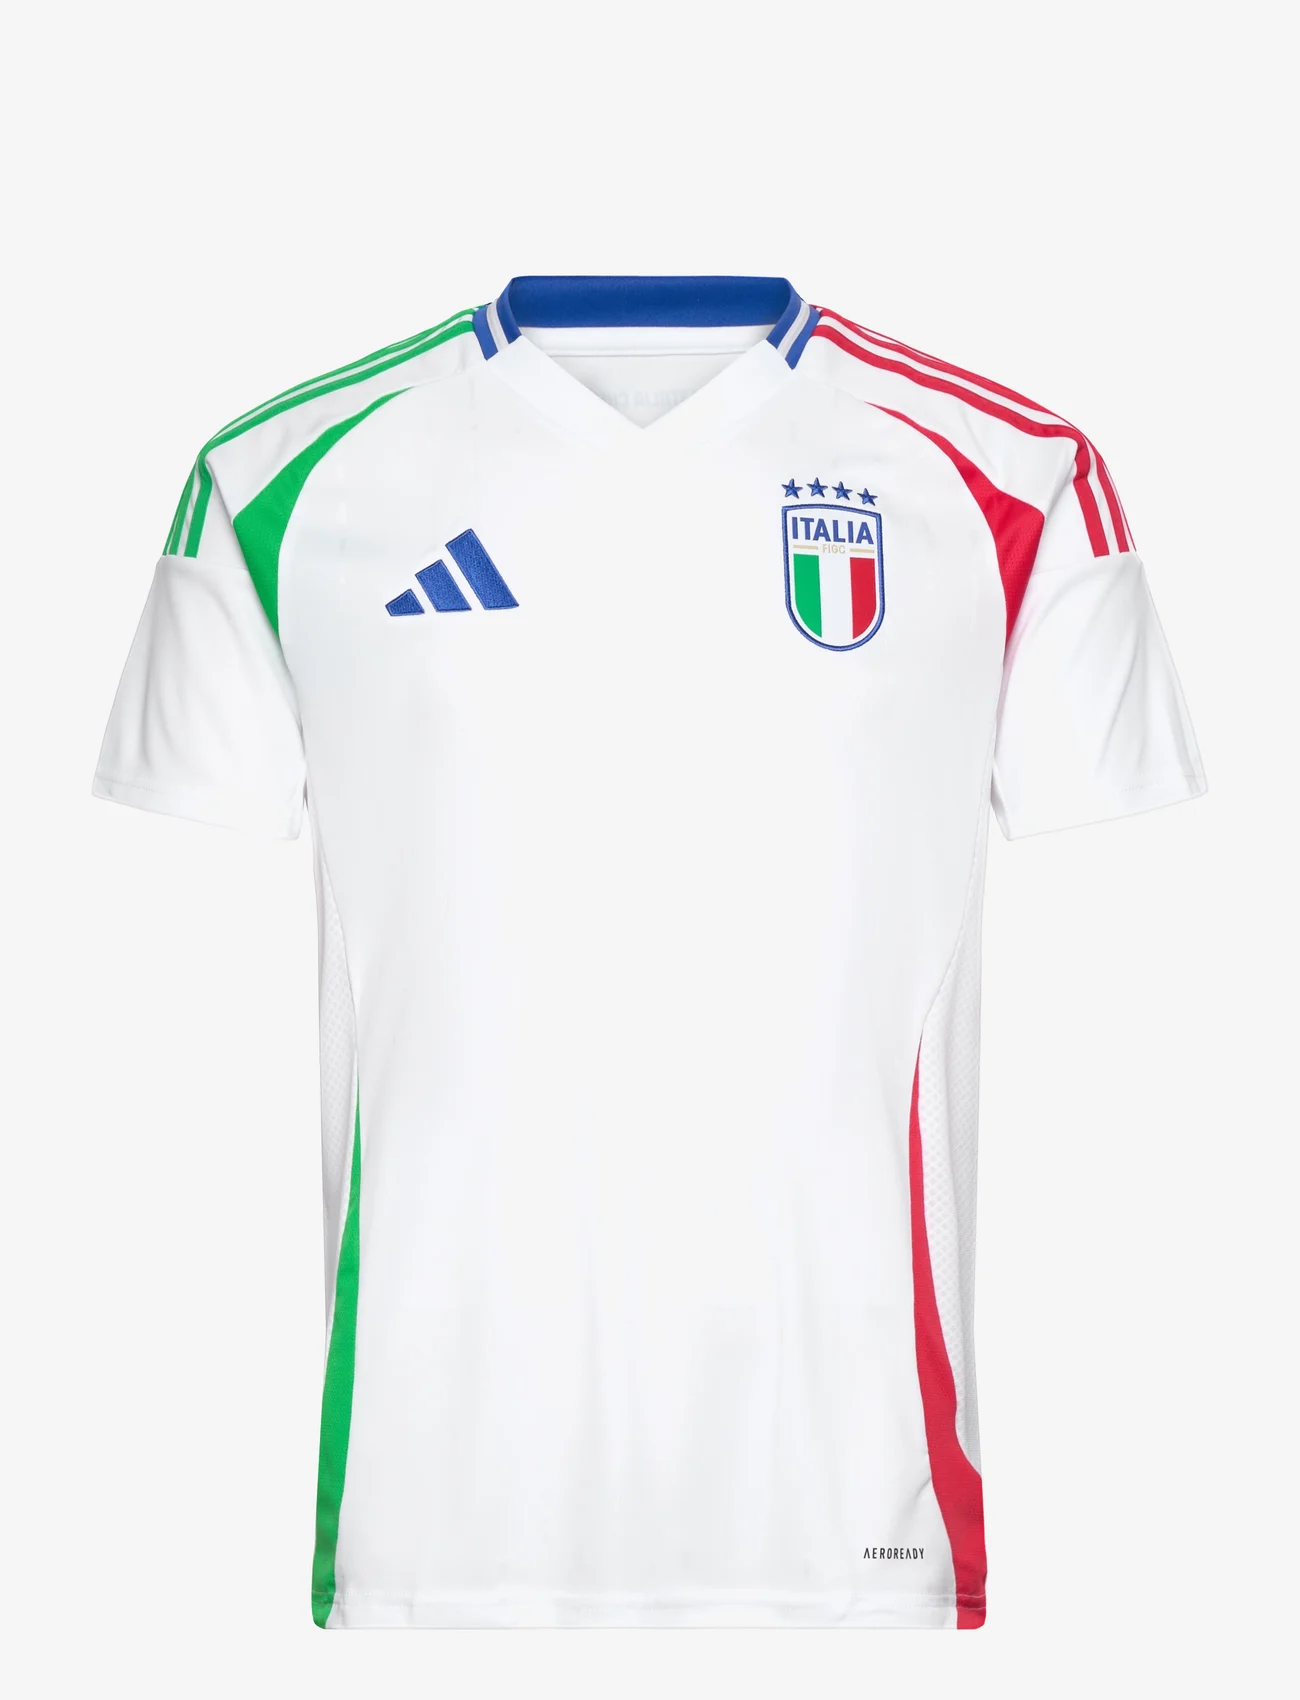 adidas Performance - FIGC A JSY - football shirts - white - 0